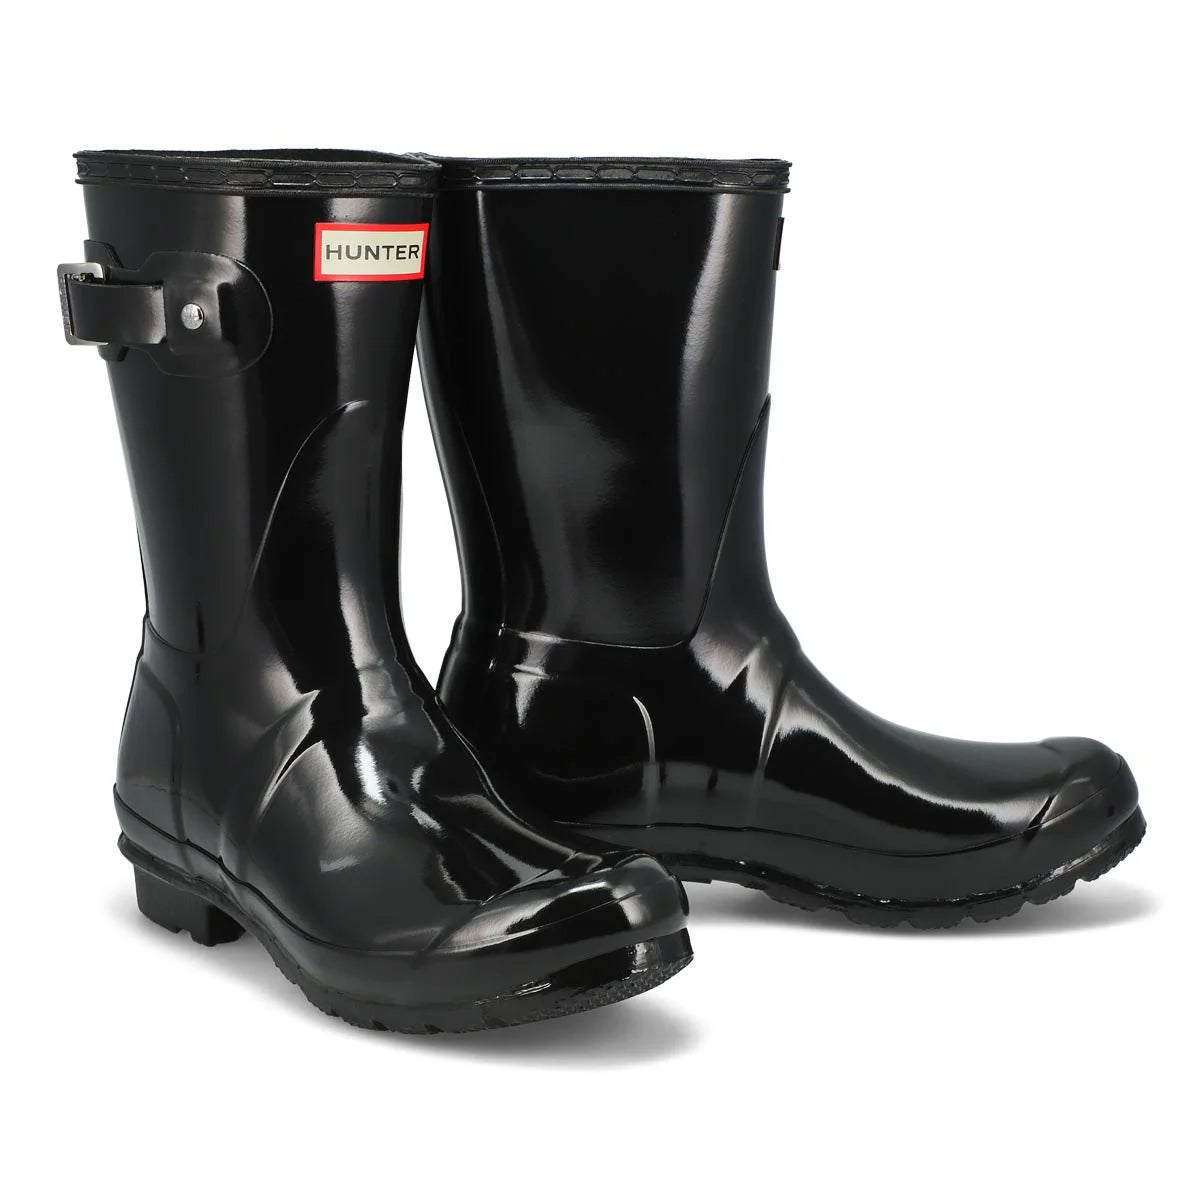 HUNTER Women's Original Short Gloss Rain Boots - Black (US 7)